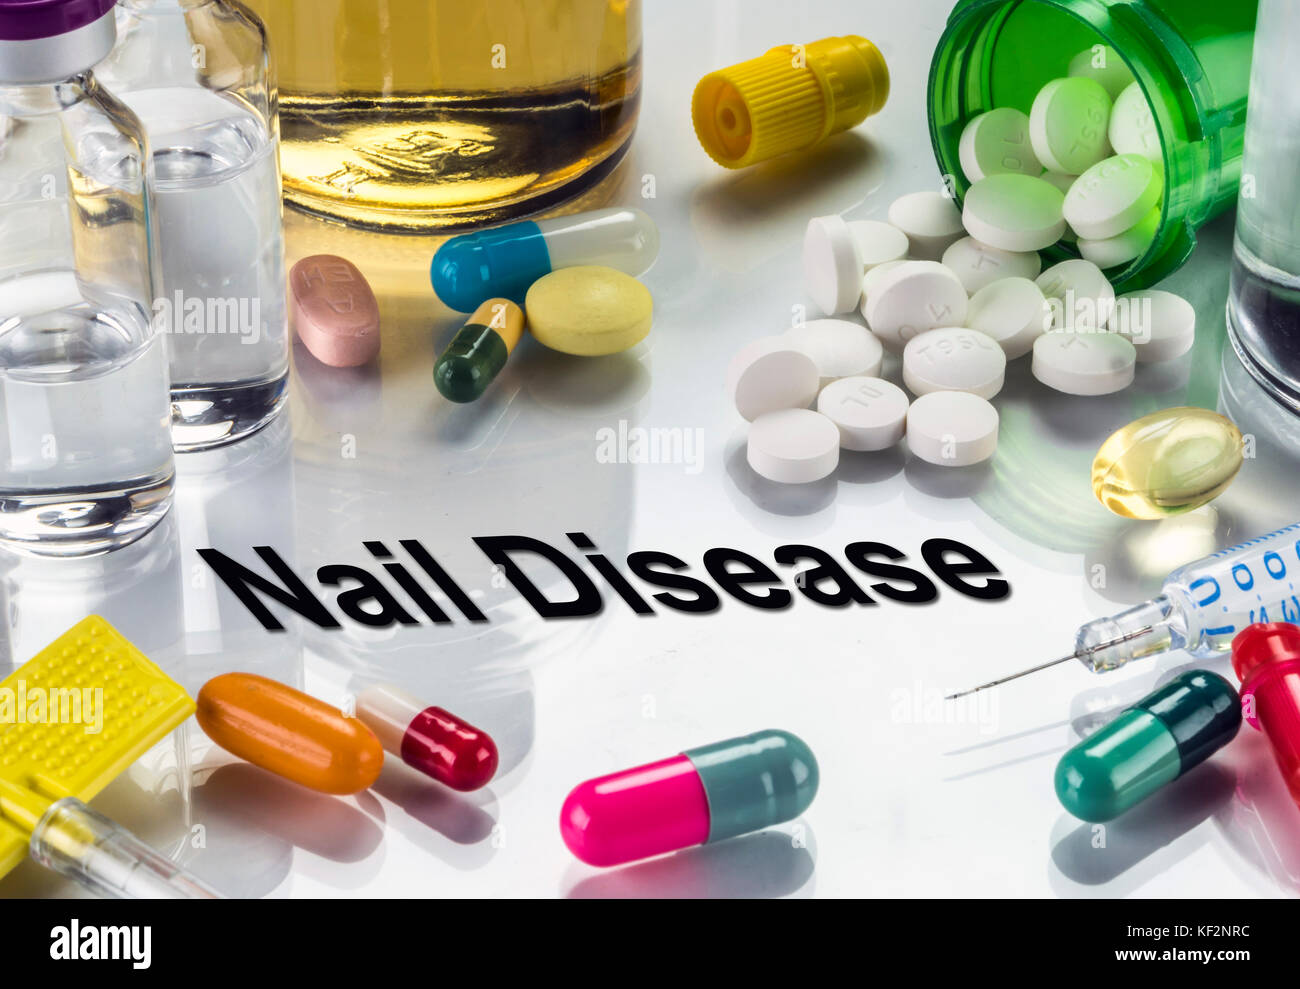 Nail disease, medicines as concept of ordinary treatment, conceptual image Stock Photo